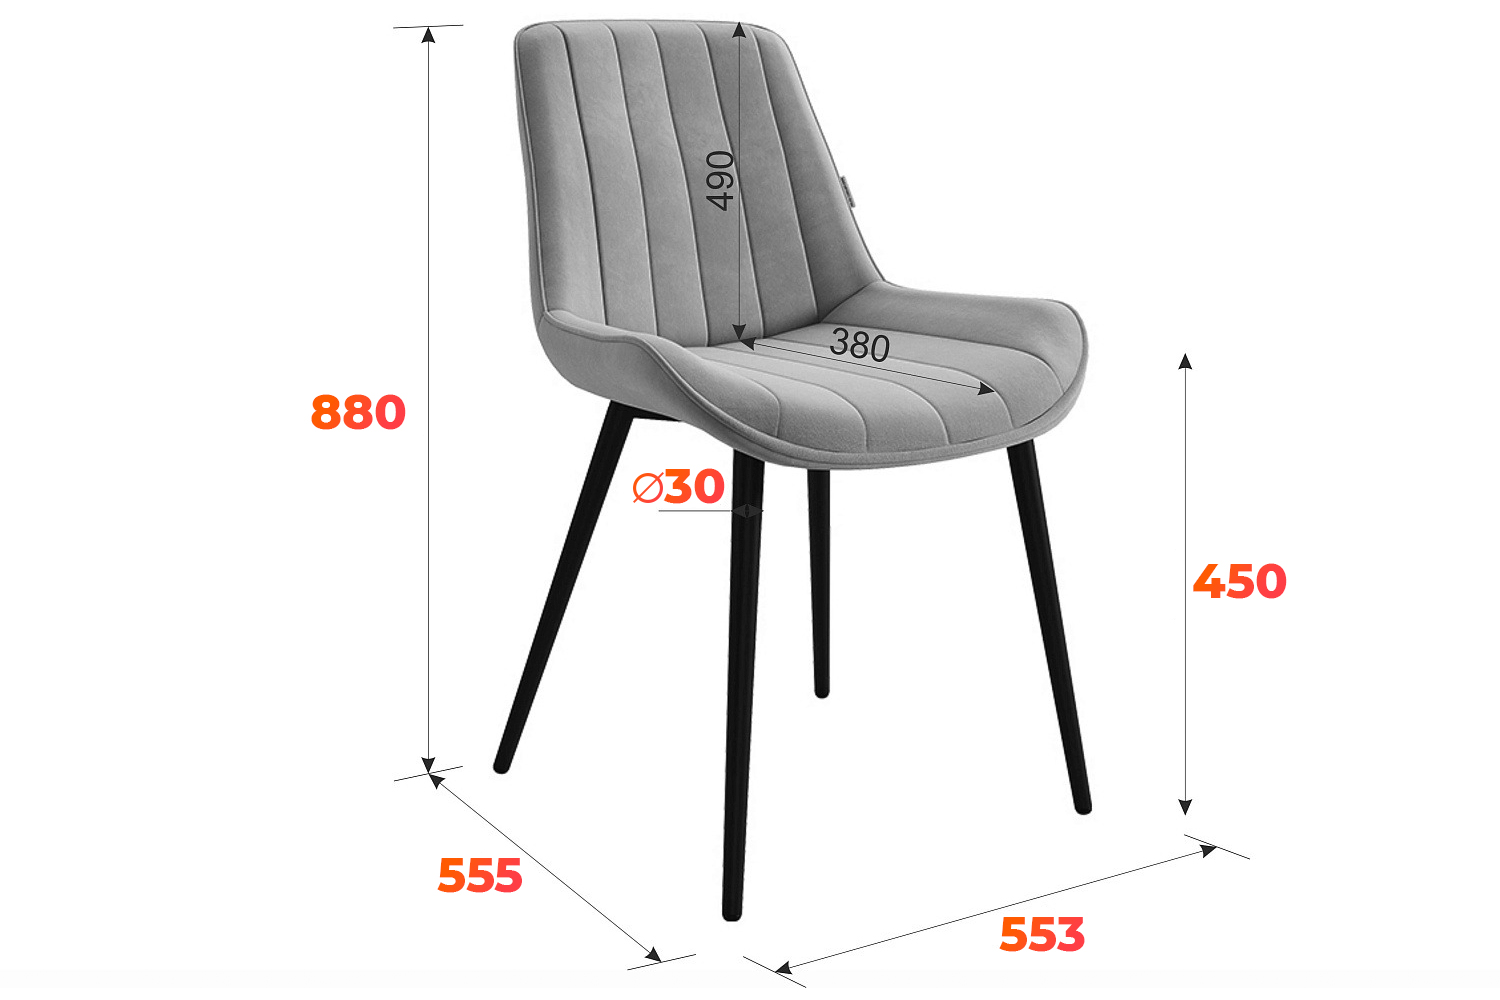 Схема стула Лари с размерами